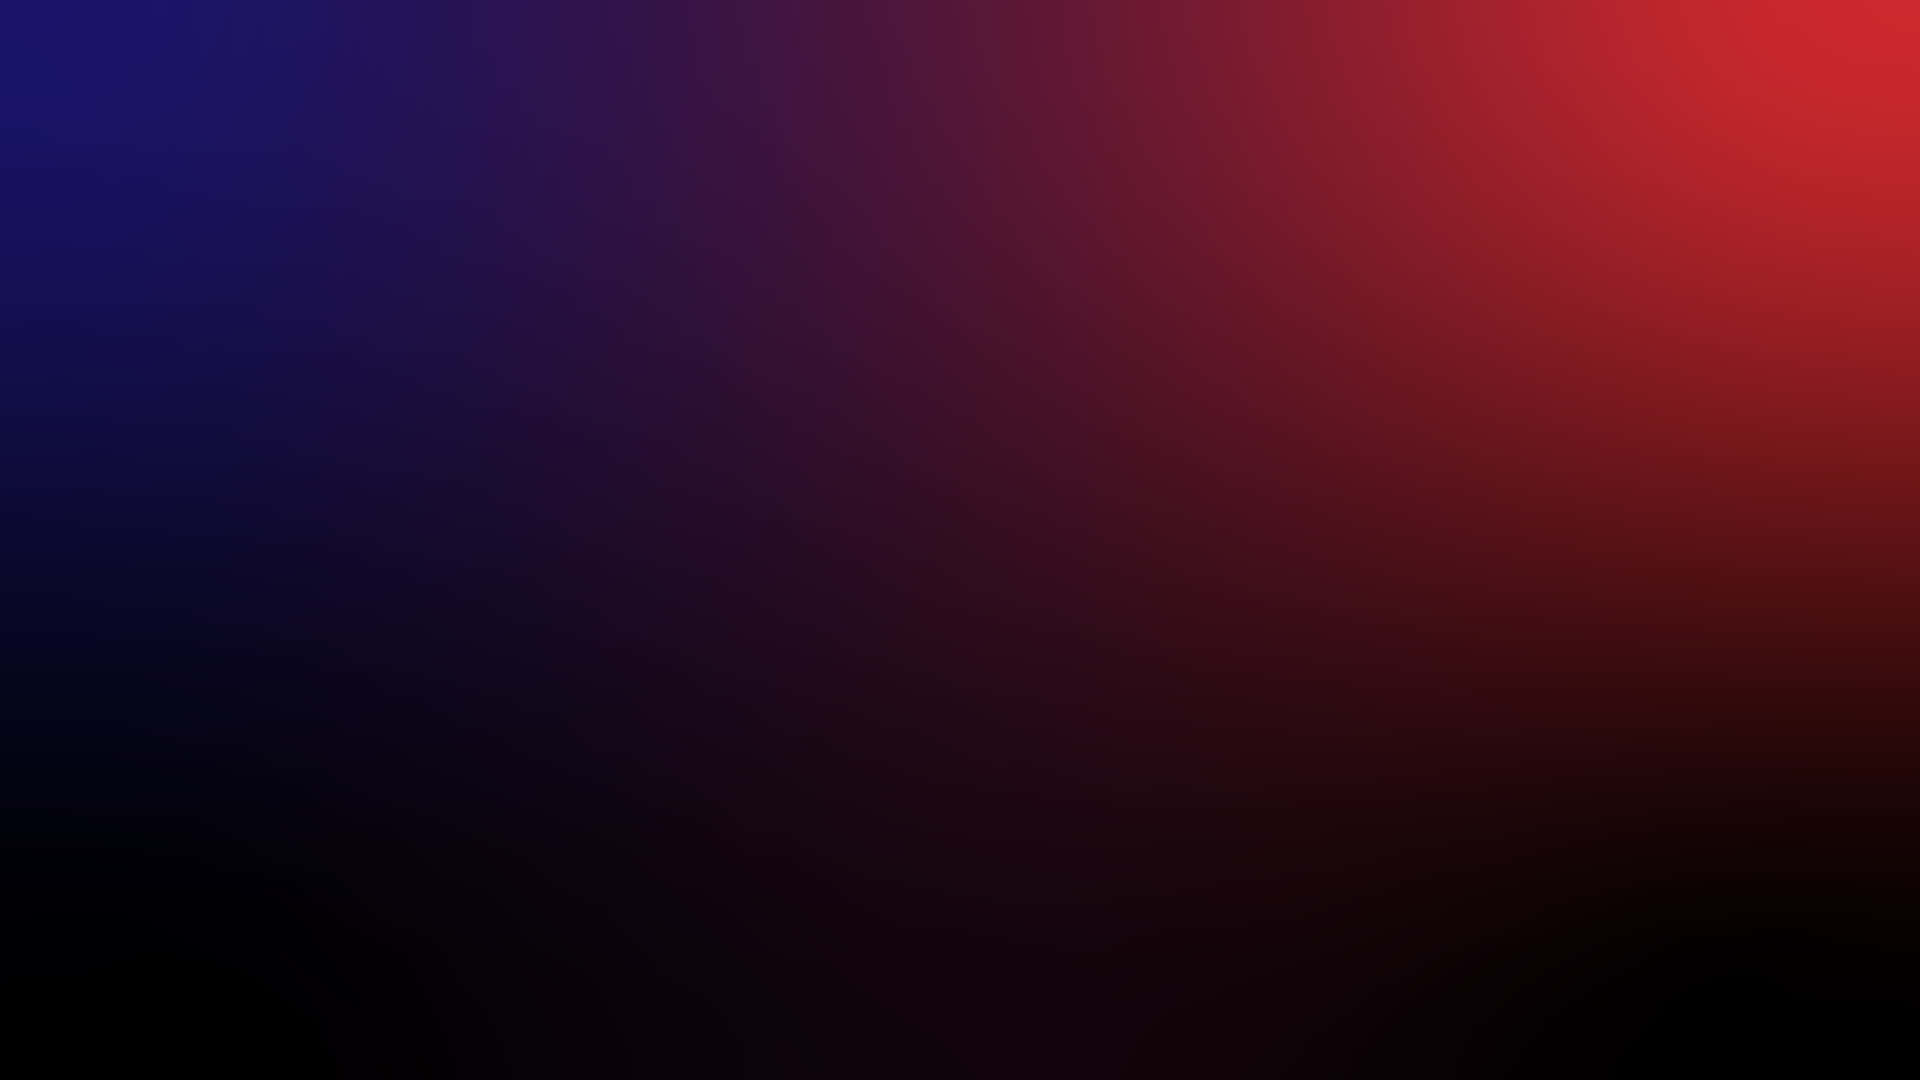 Download Stunning Dark Blue And Red Gradient Background |